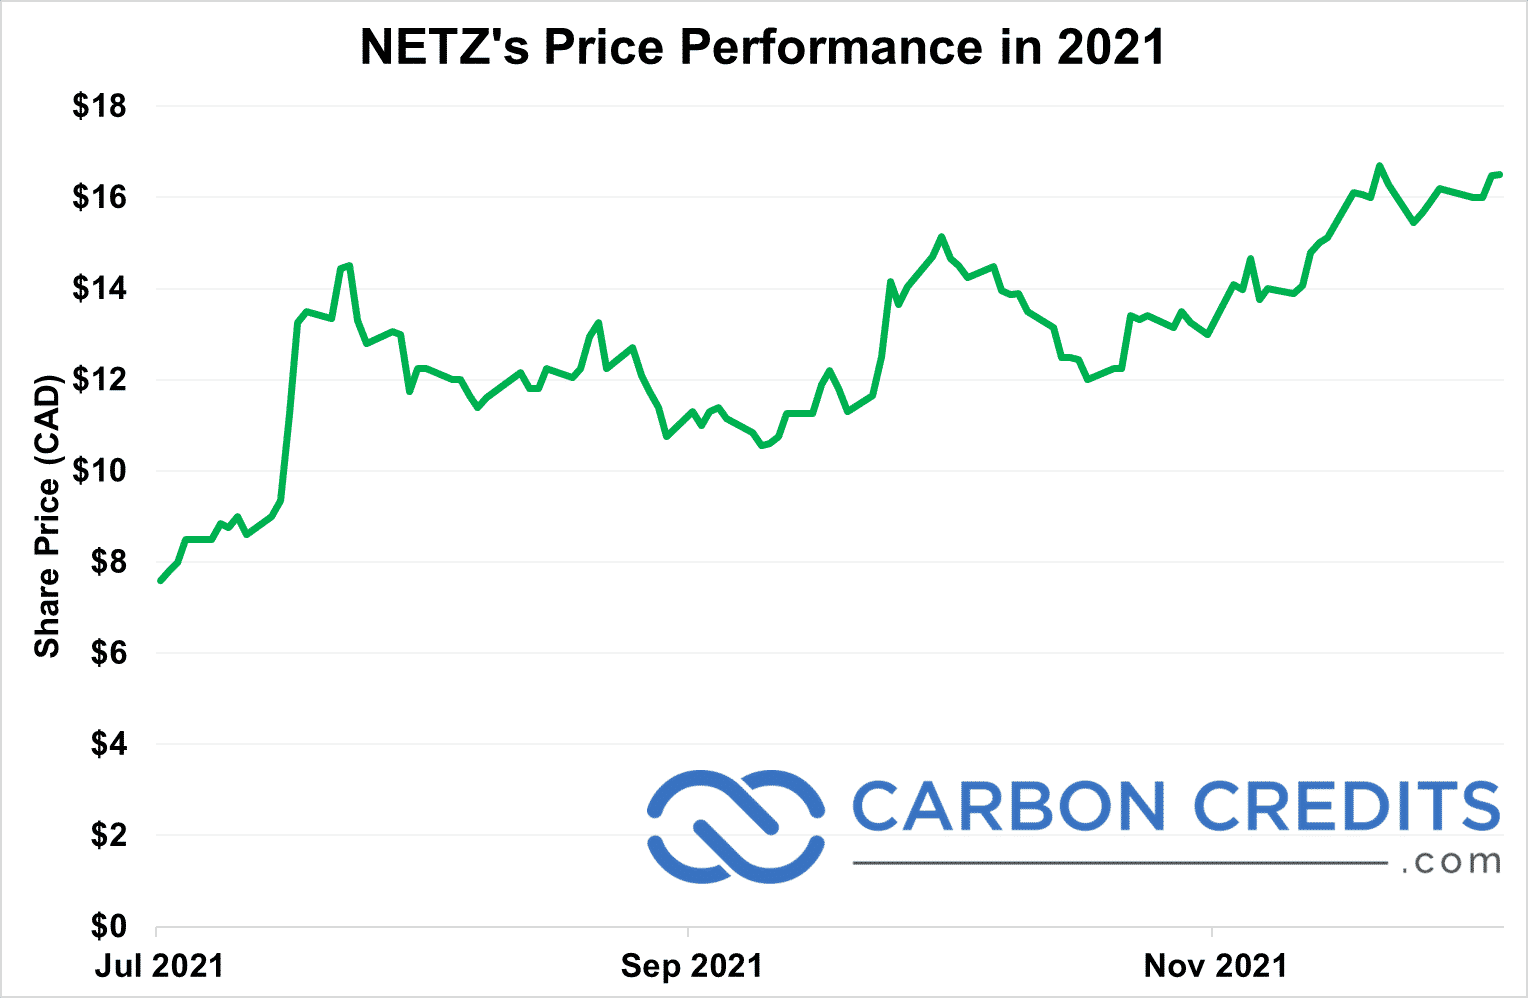 NETZ price performance in 2021